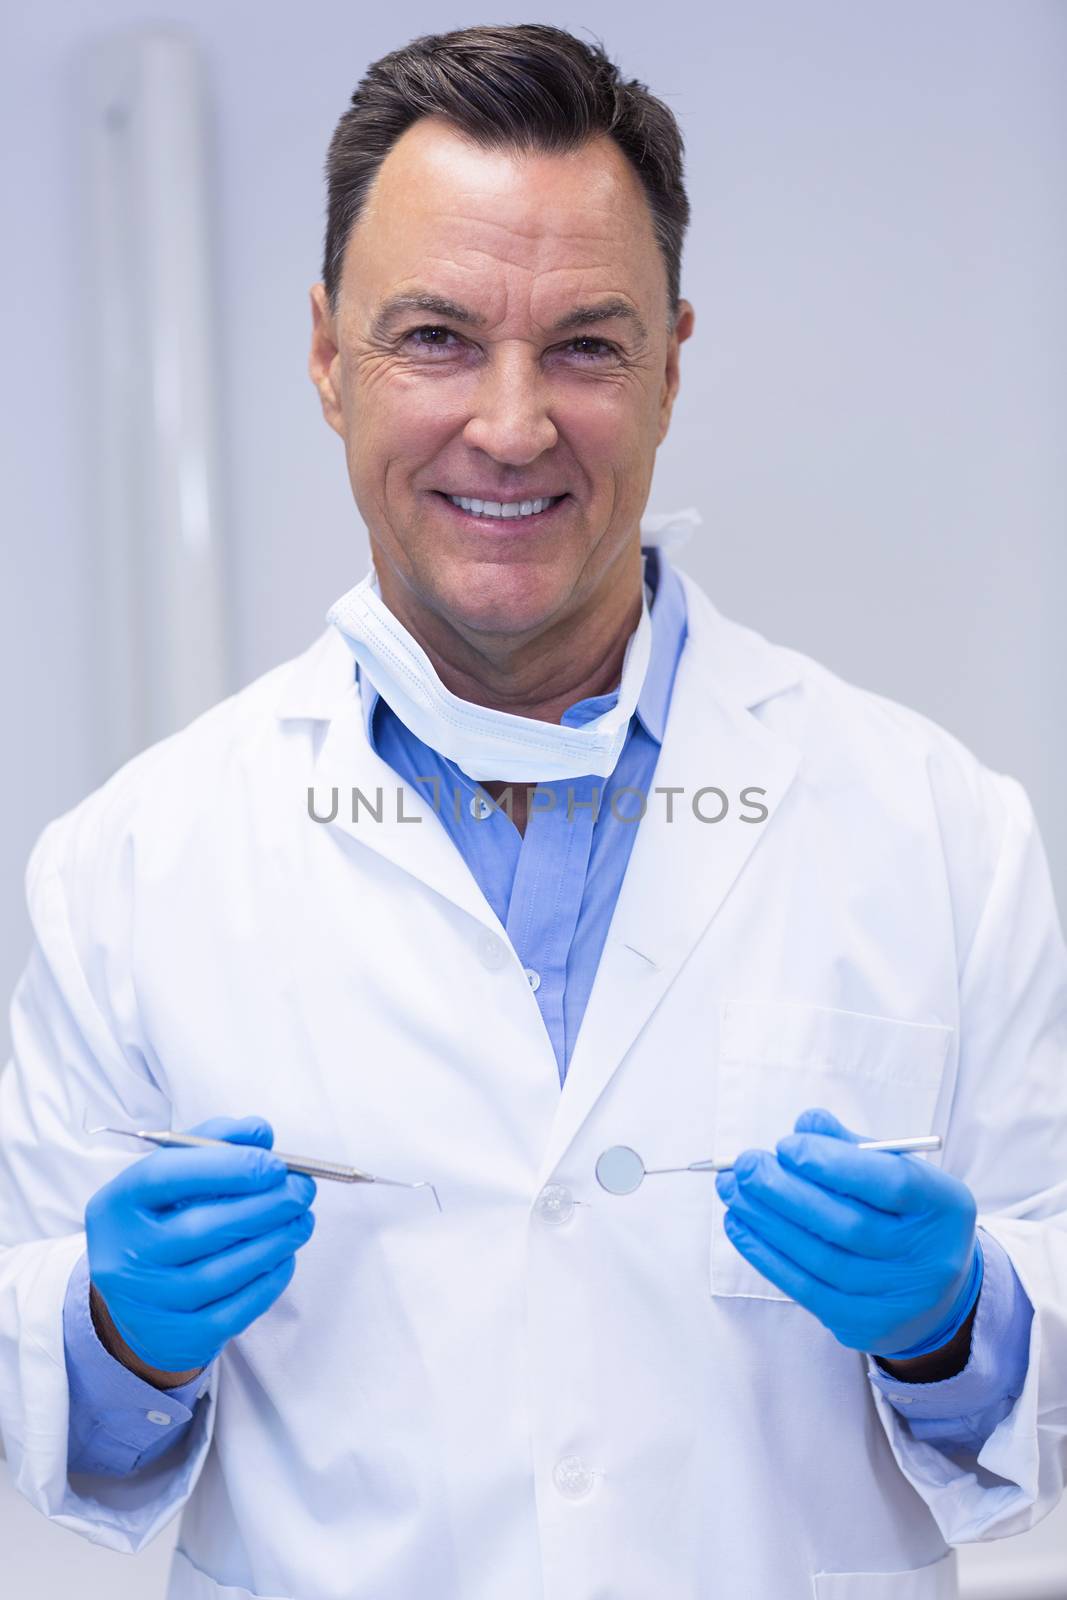 Portrait of smiling dentist holding dental tools by Wavebreakmedia